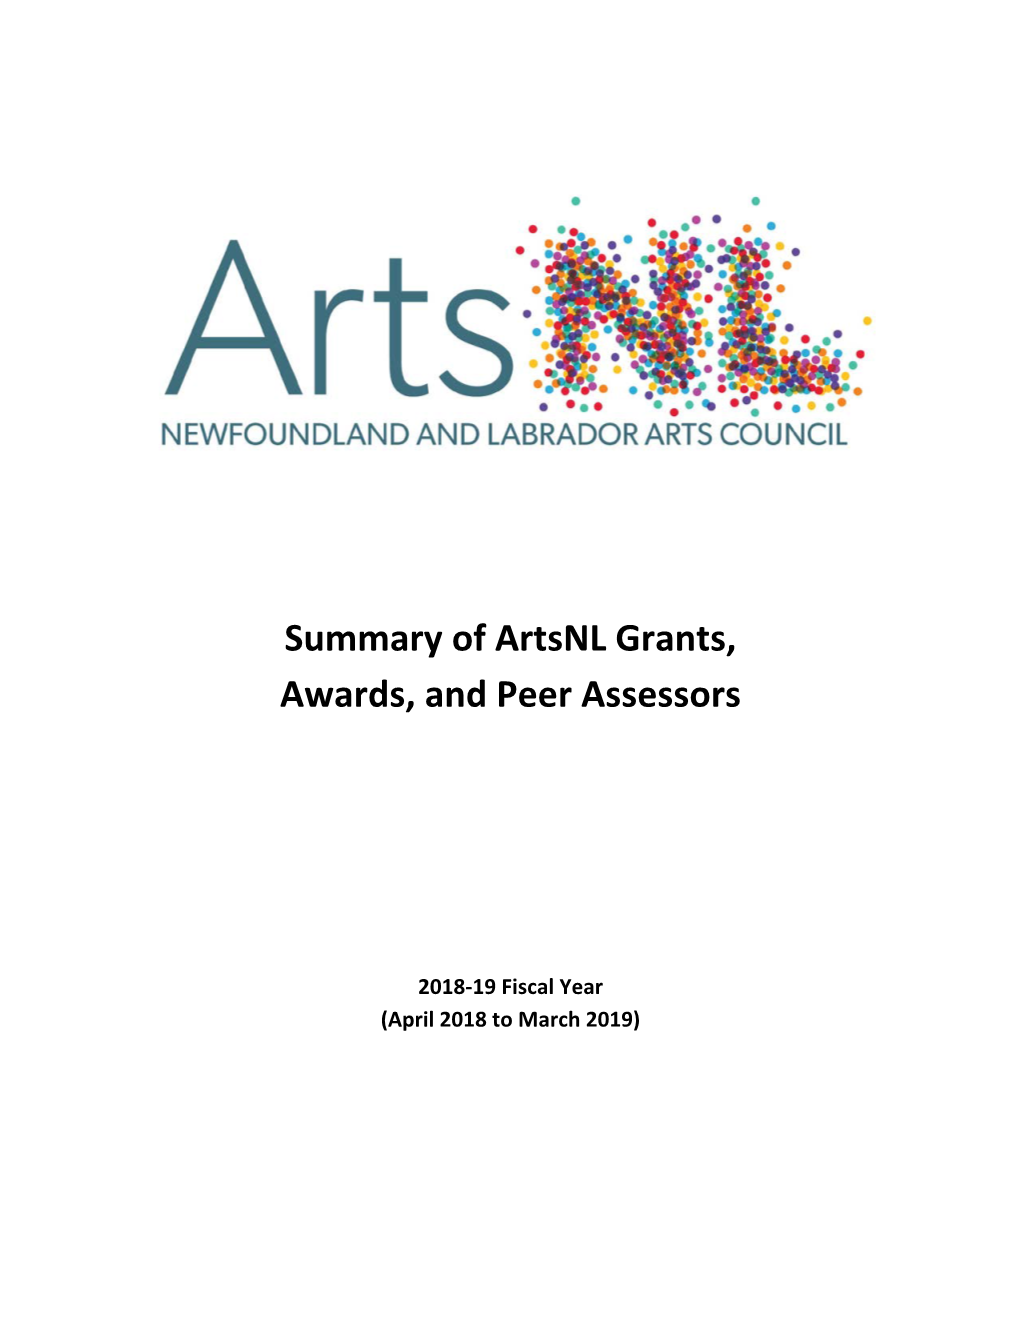 Summary of Artsnl Grants, Awards, and Peer Assessors